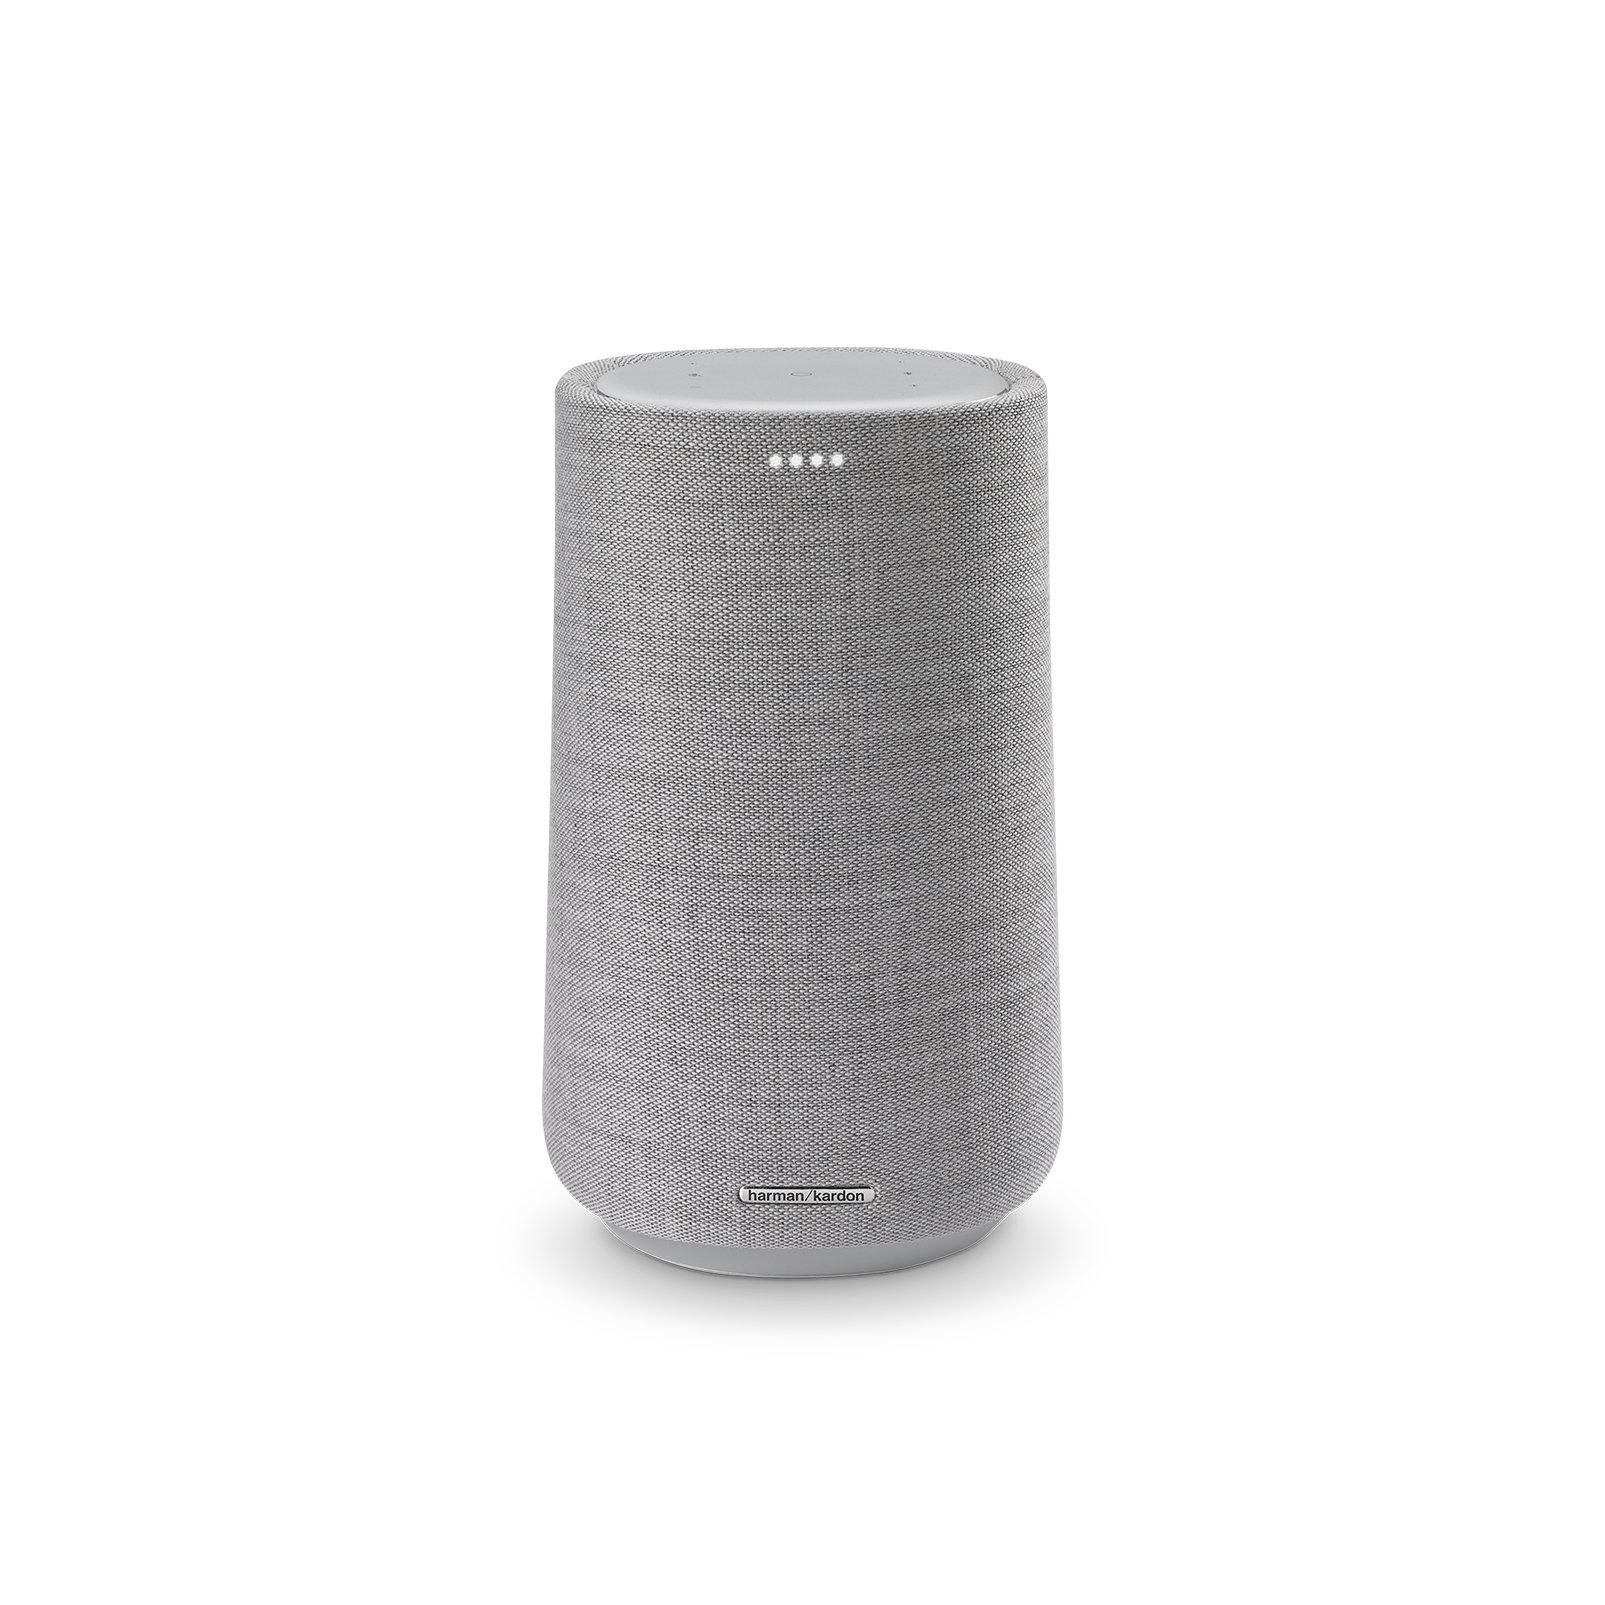 Harman Kardon Citation 100 - Grey - The smallest, smartest home speaker with impactful sound - Front